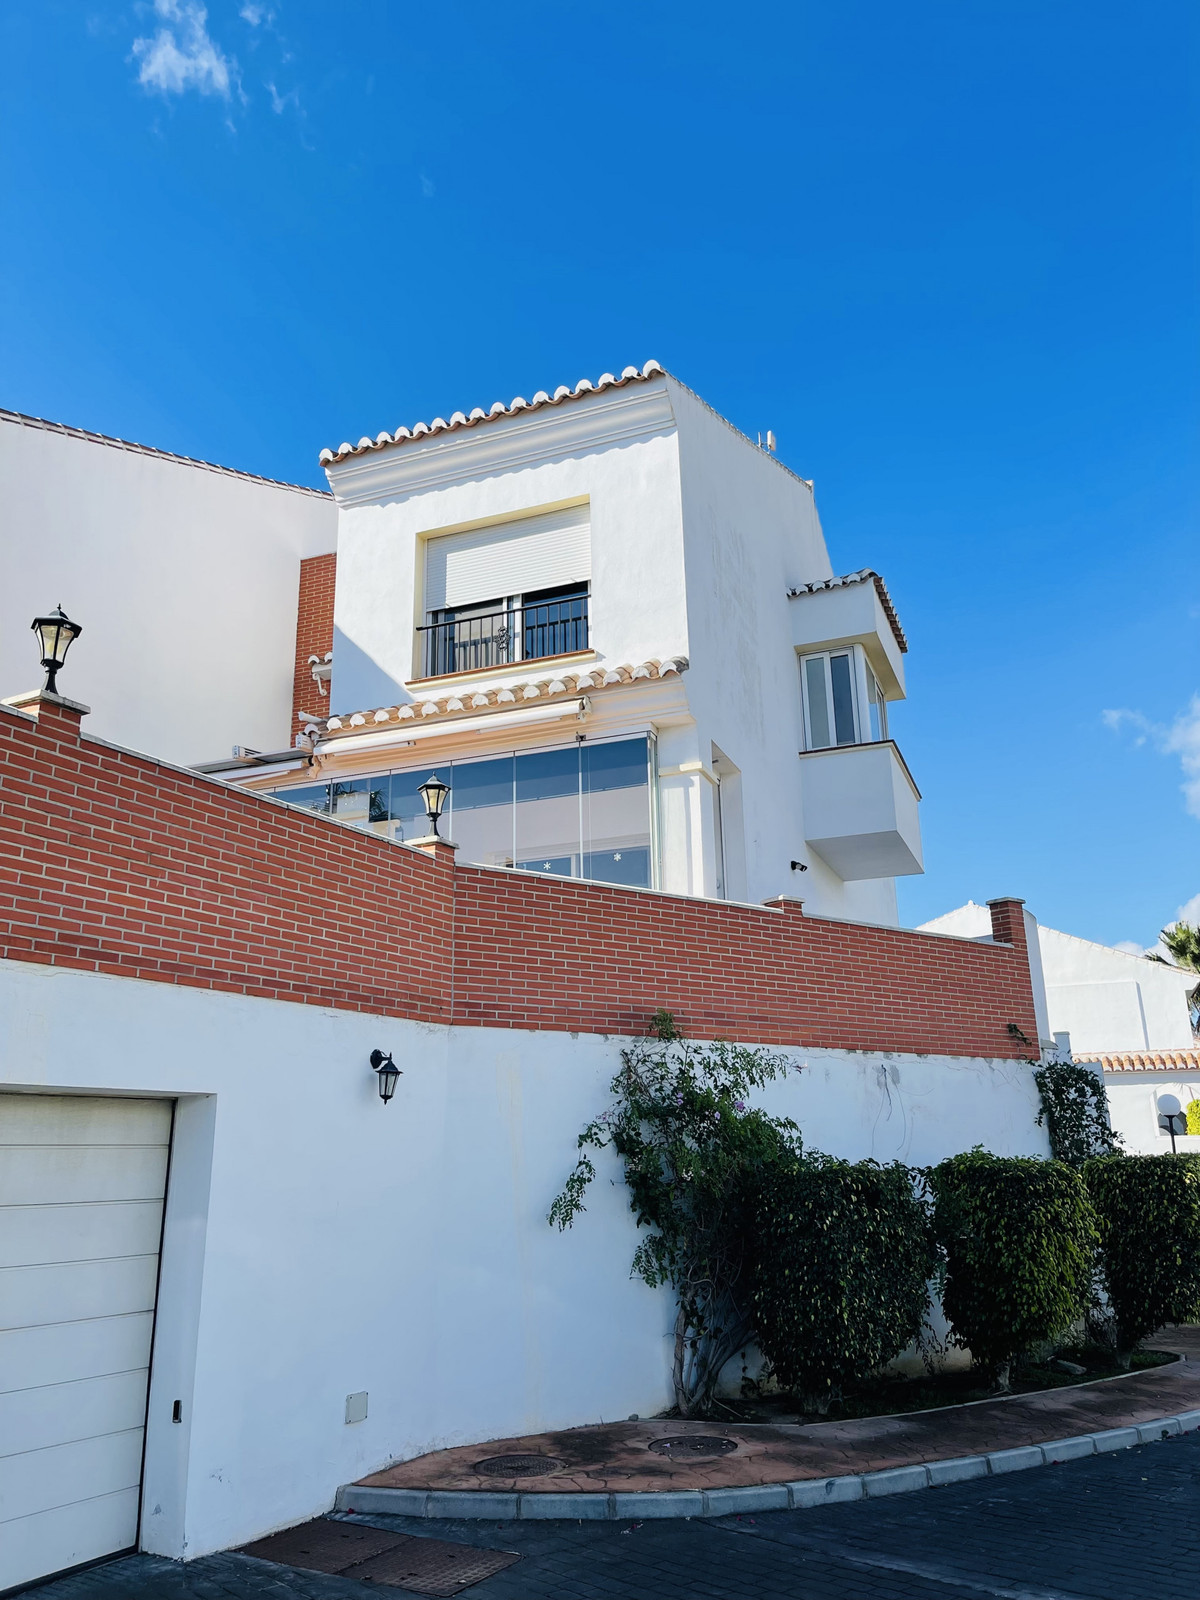 5 bedroom Townhouse For Sale in Mijas Costa, Málaga - thumb 18